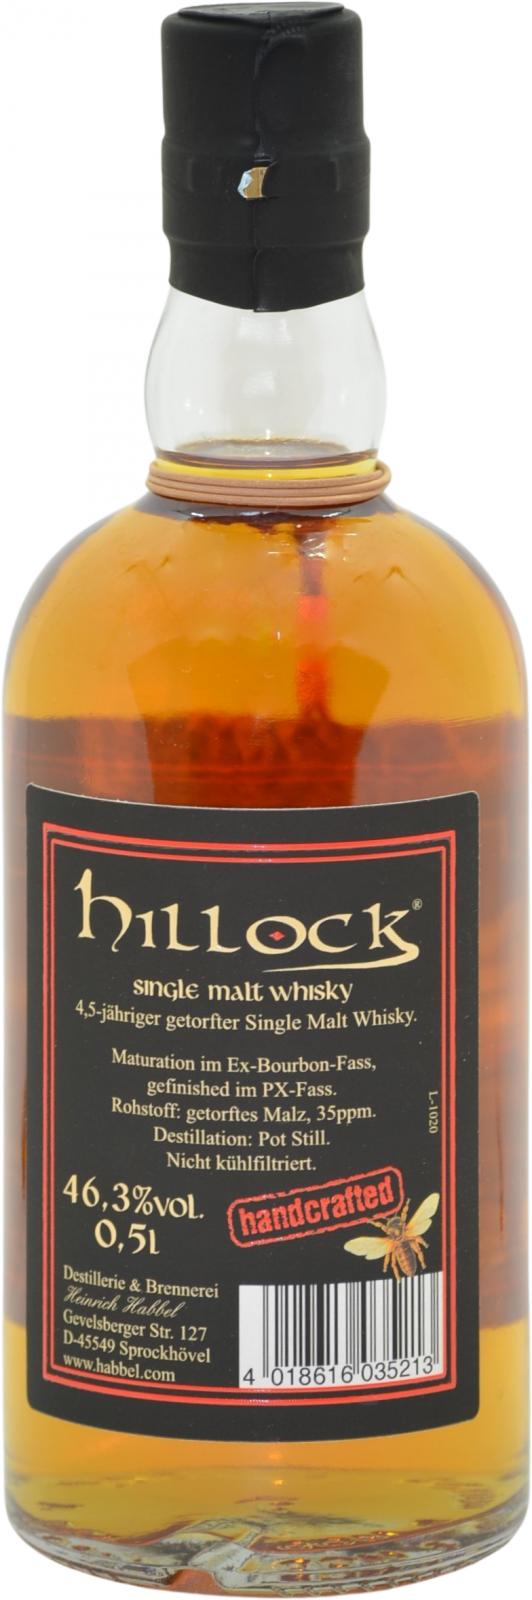 Hillock 4 ½